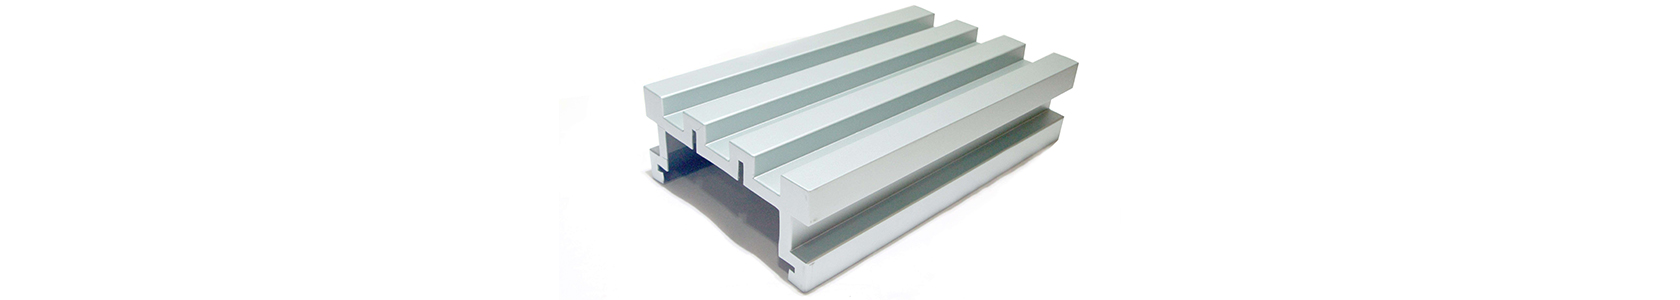 Aluminium Angle Bar(1)